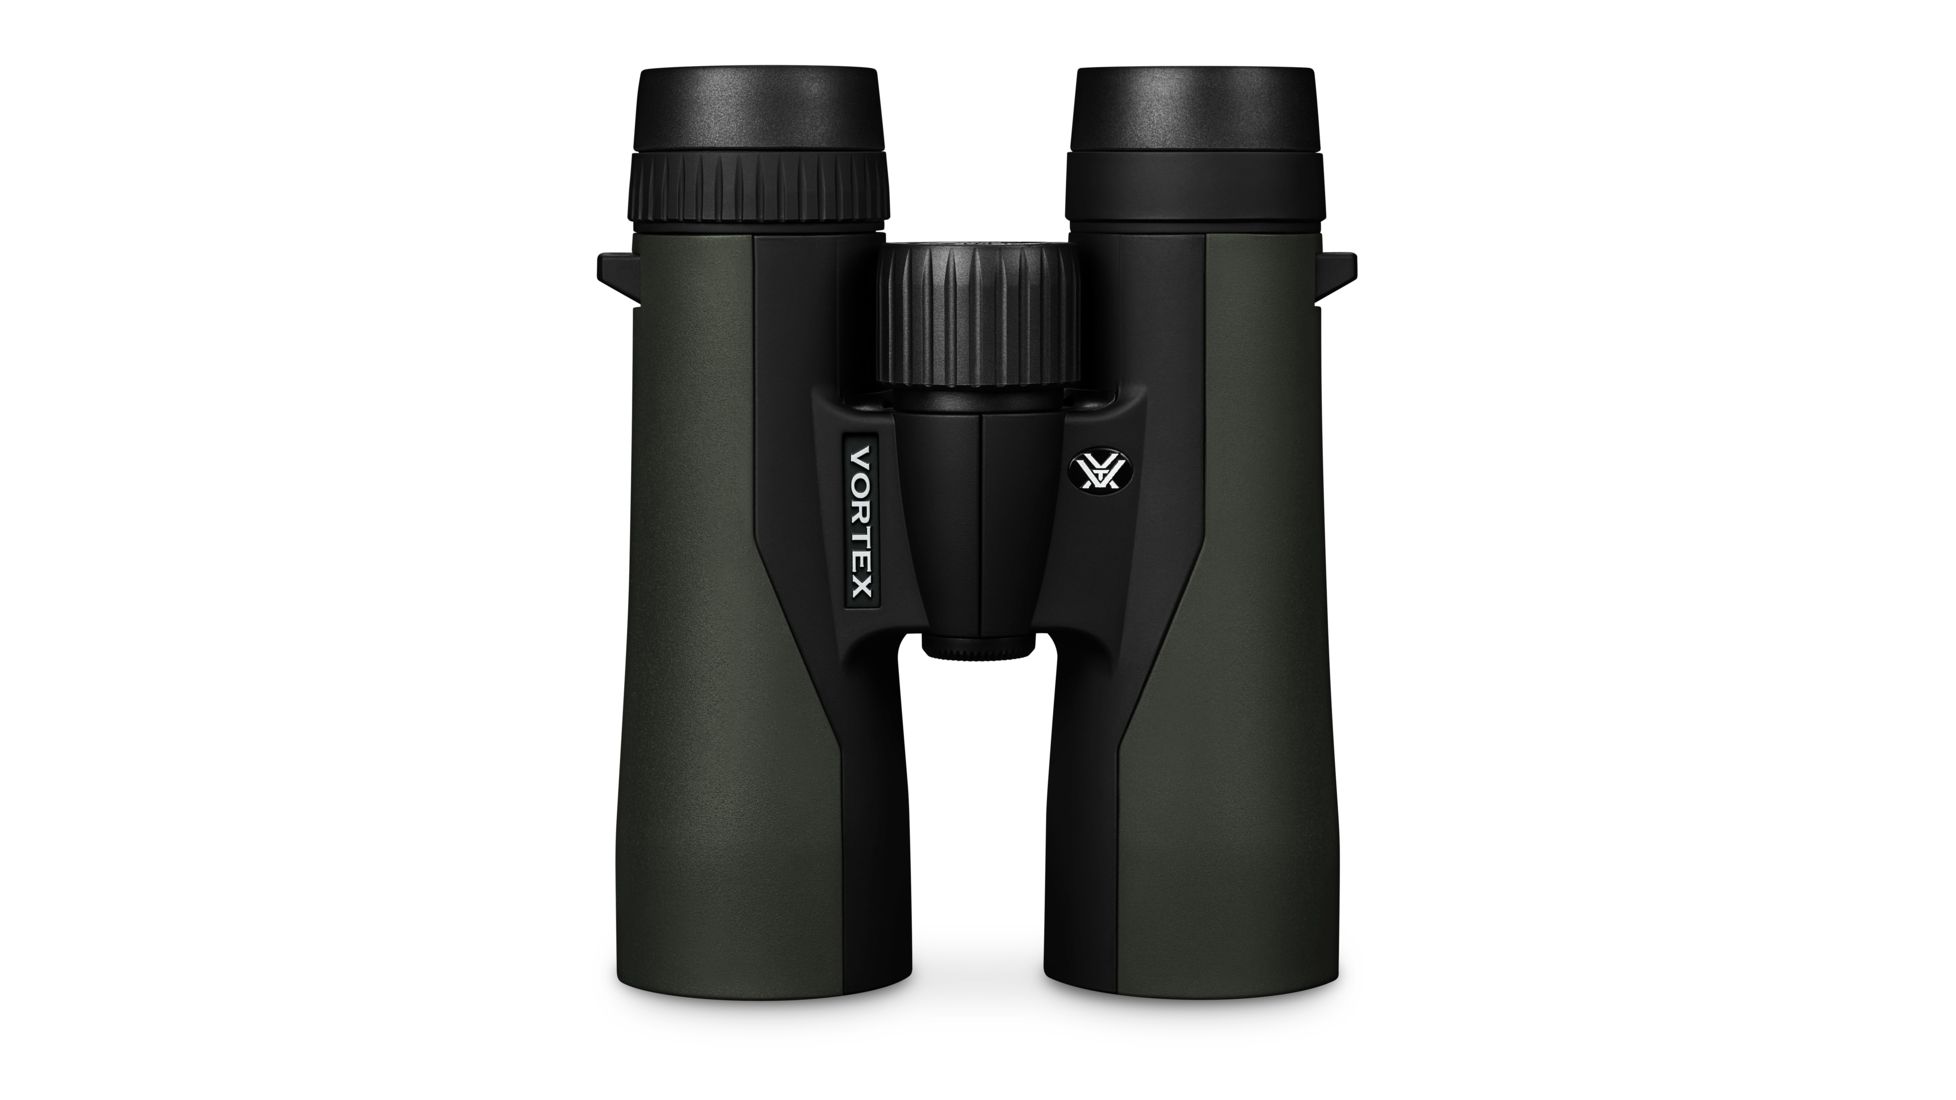 Vortex Crossfire HD 10x42 Binoculars